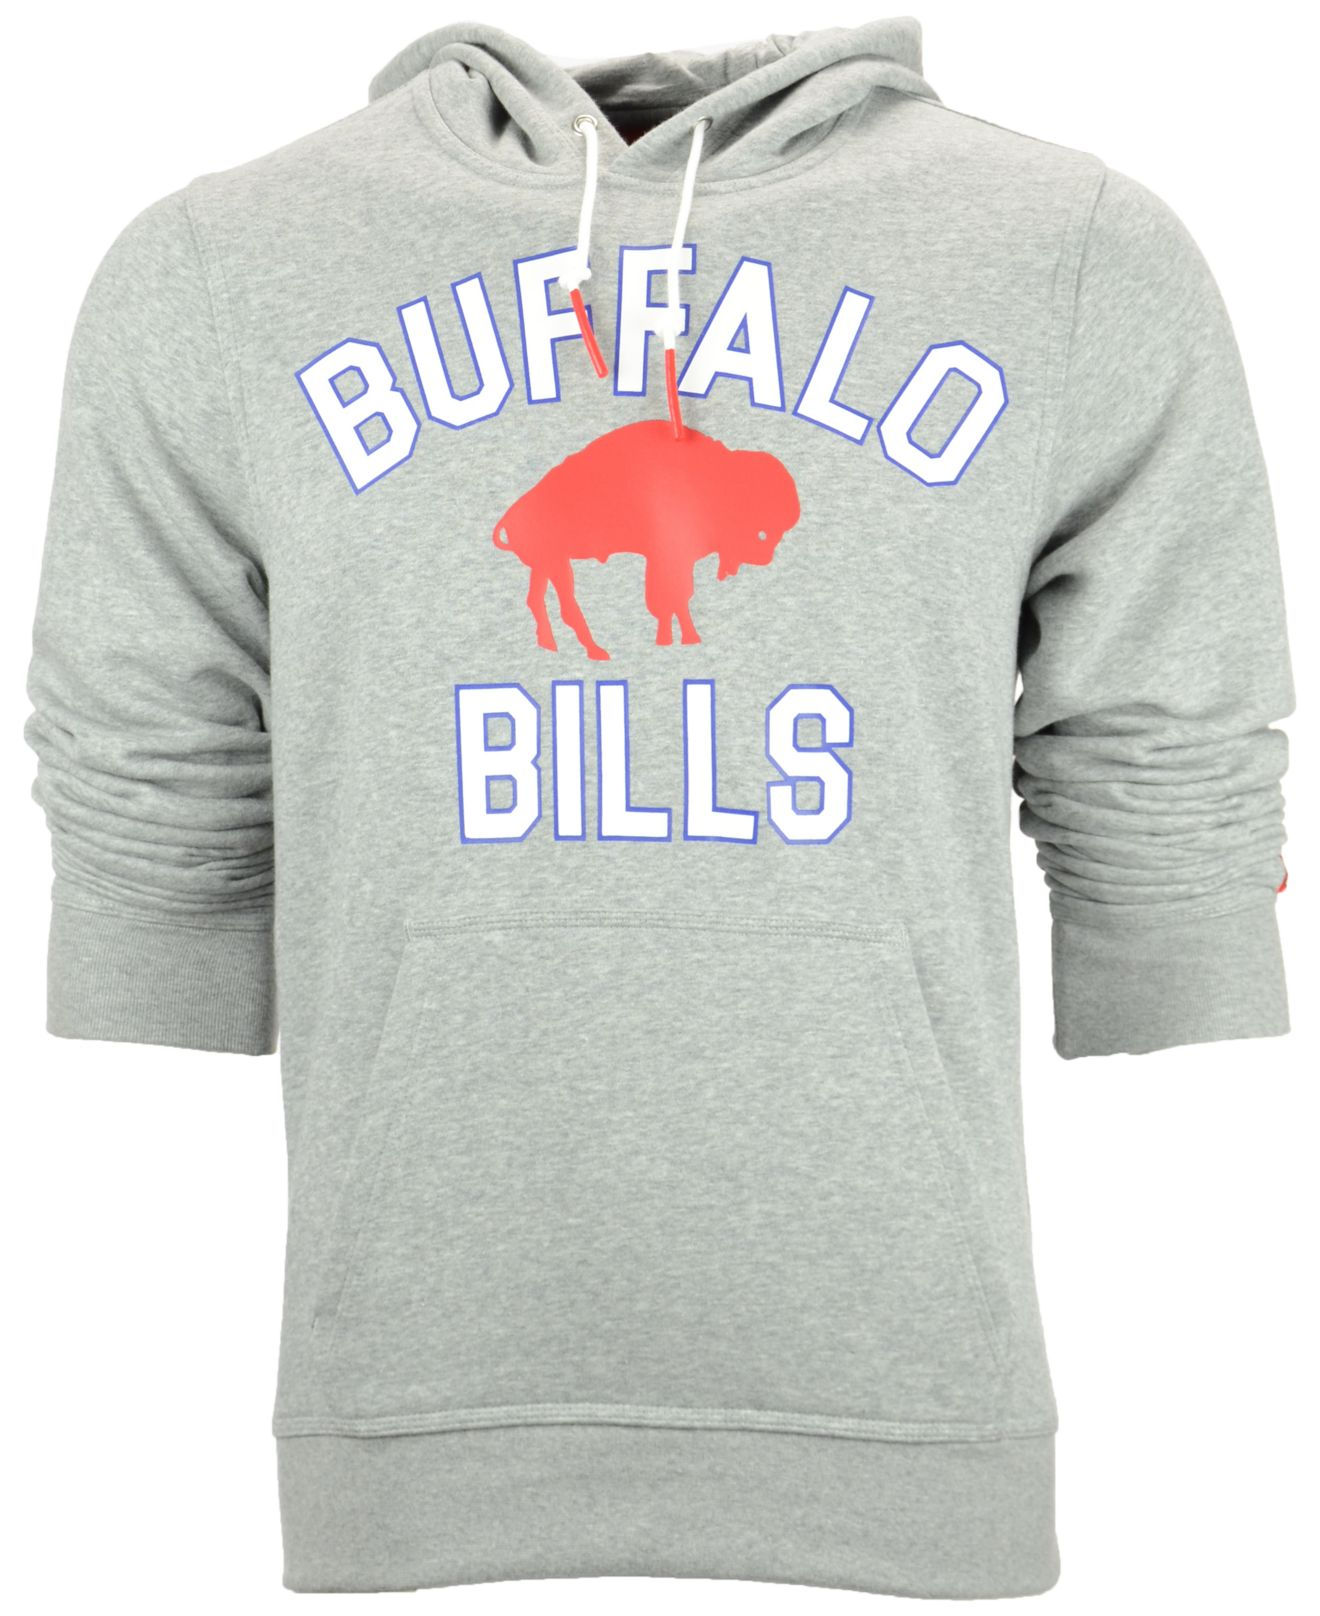 buffalo bills nike hoodie